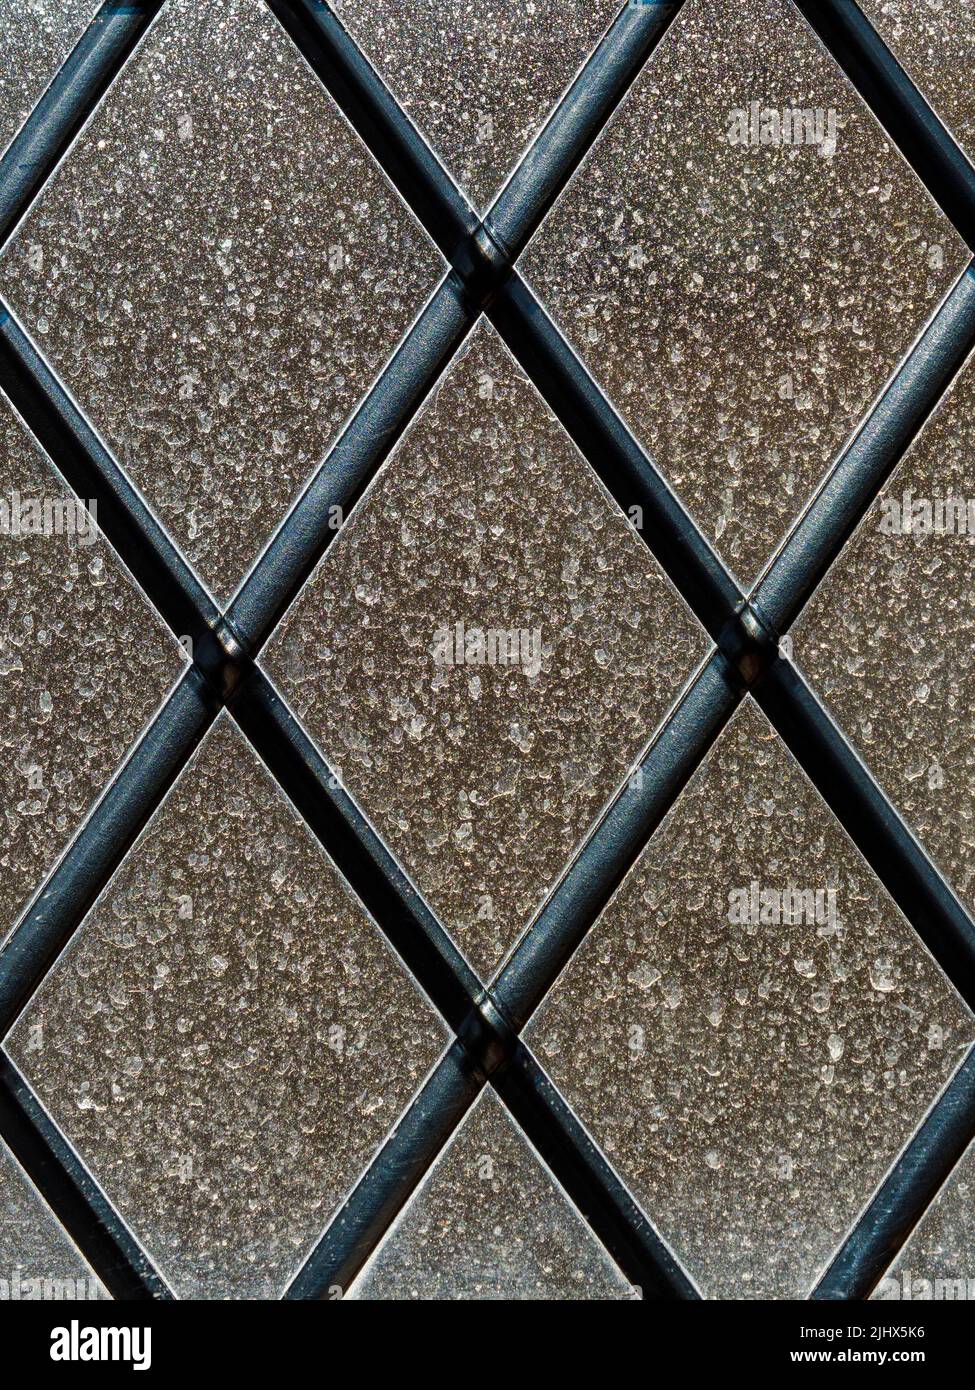 Backlit view of sahara dust on a lattice window, Cambridgeshire, England Stock Photo